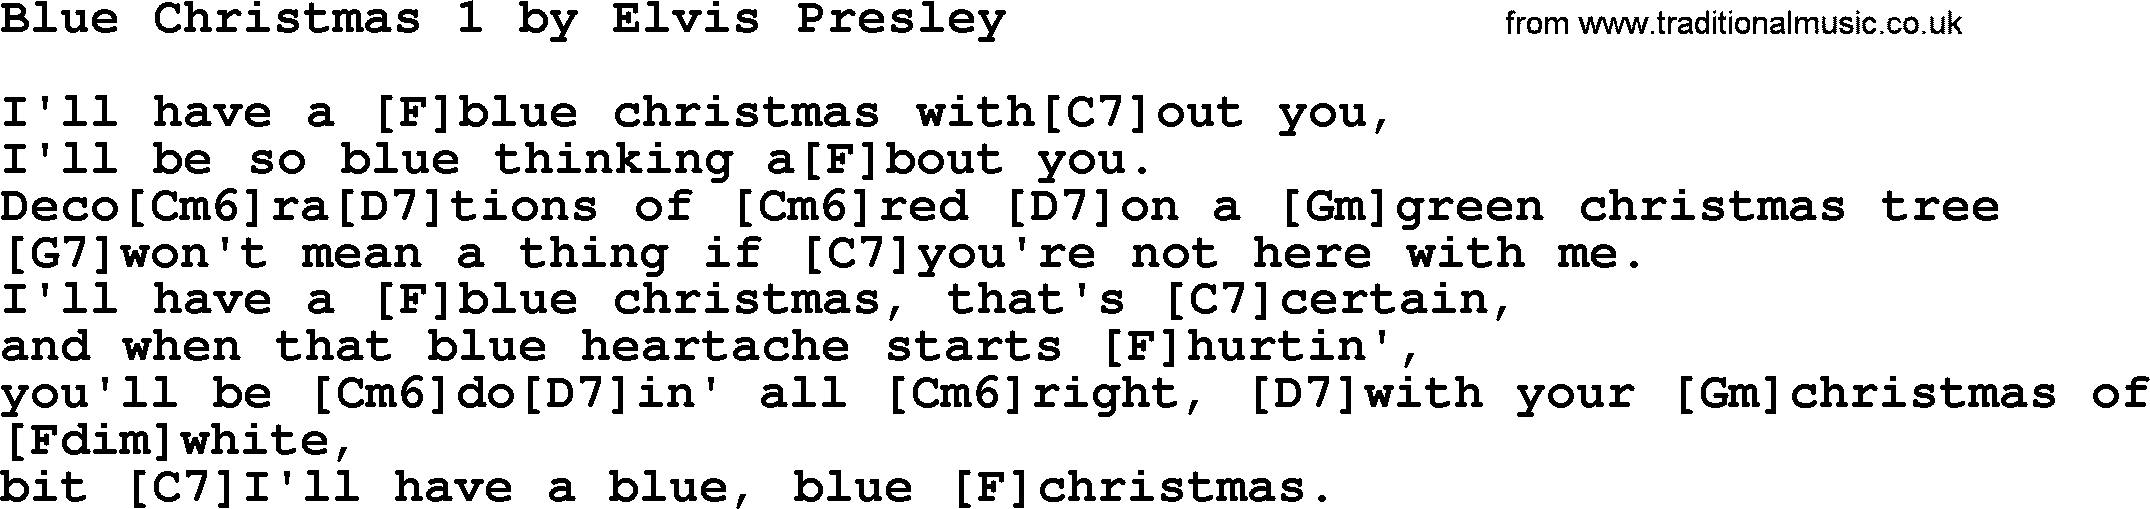 Elvis Presley song: Blue Christmas 1, lyrics and chords